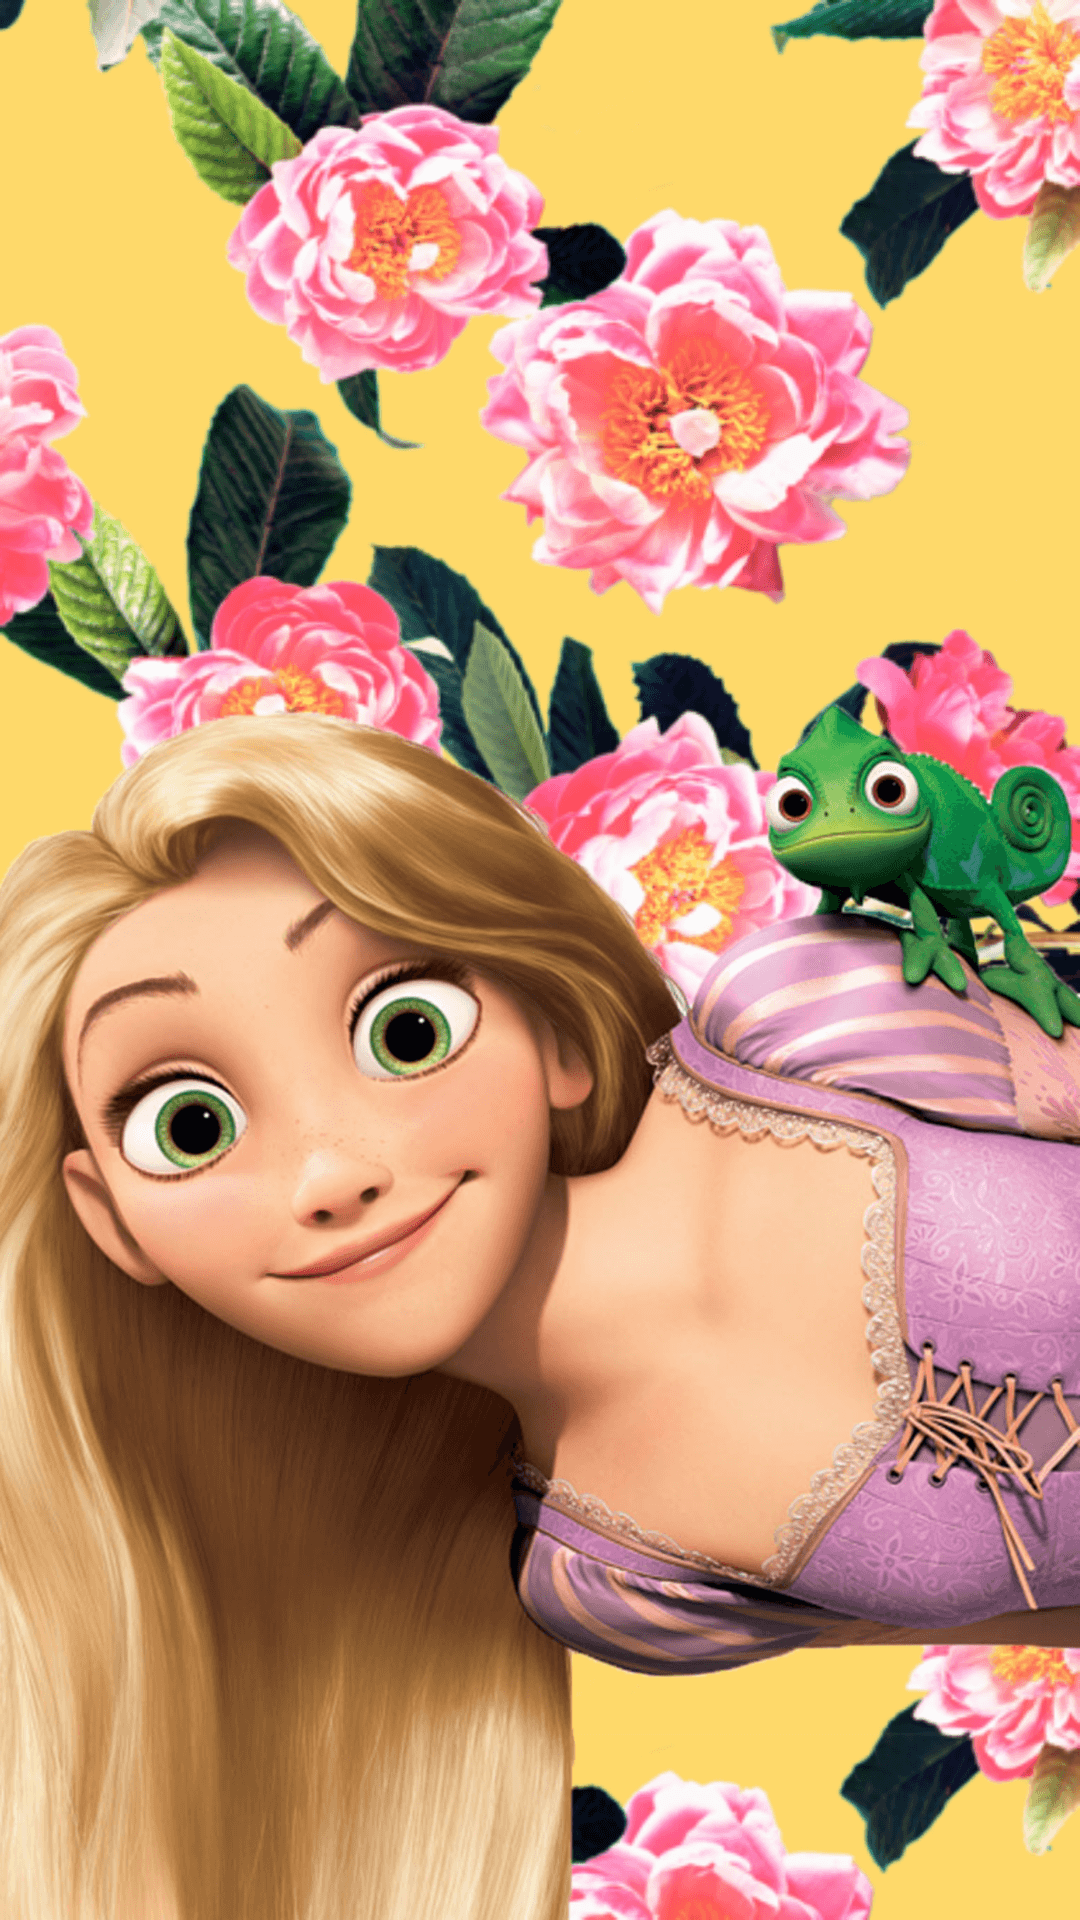 Disney Princess Rapunzel Tangled Phone Wallpaper